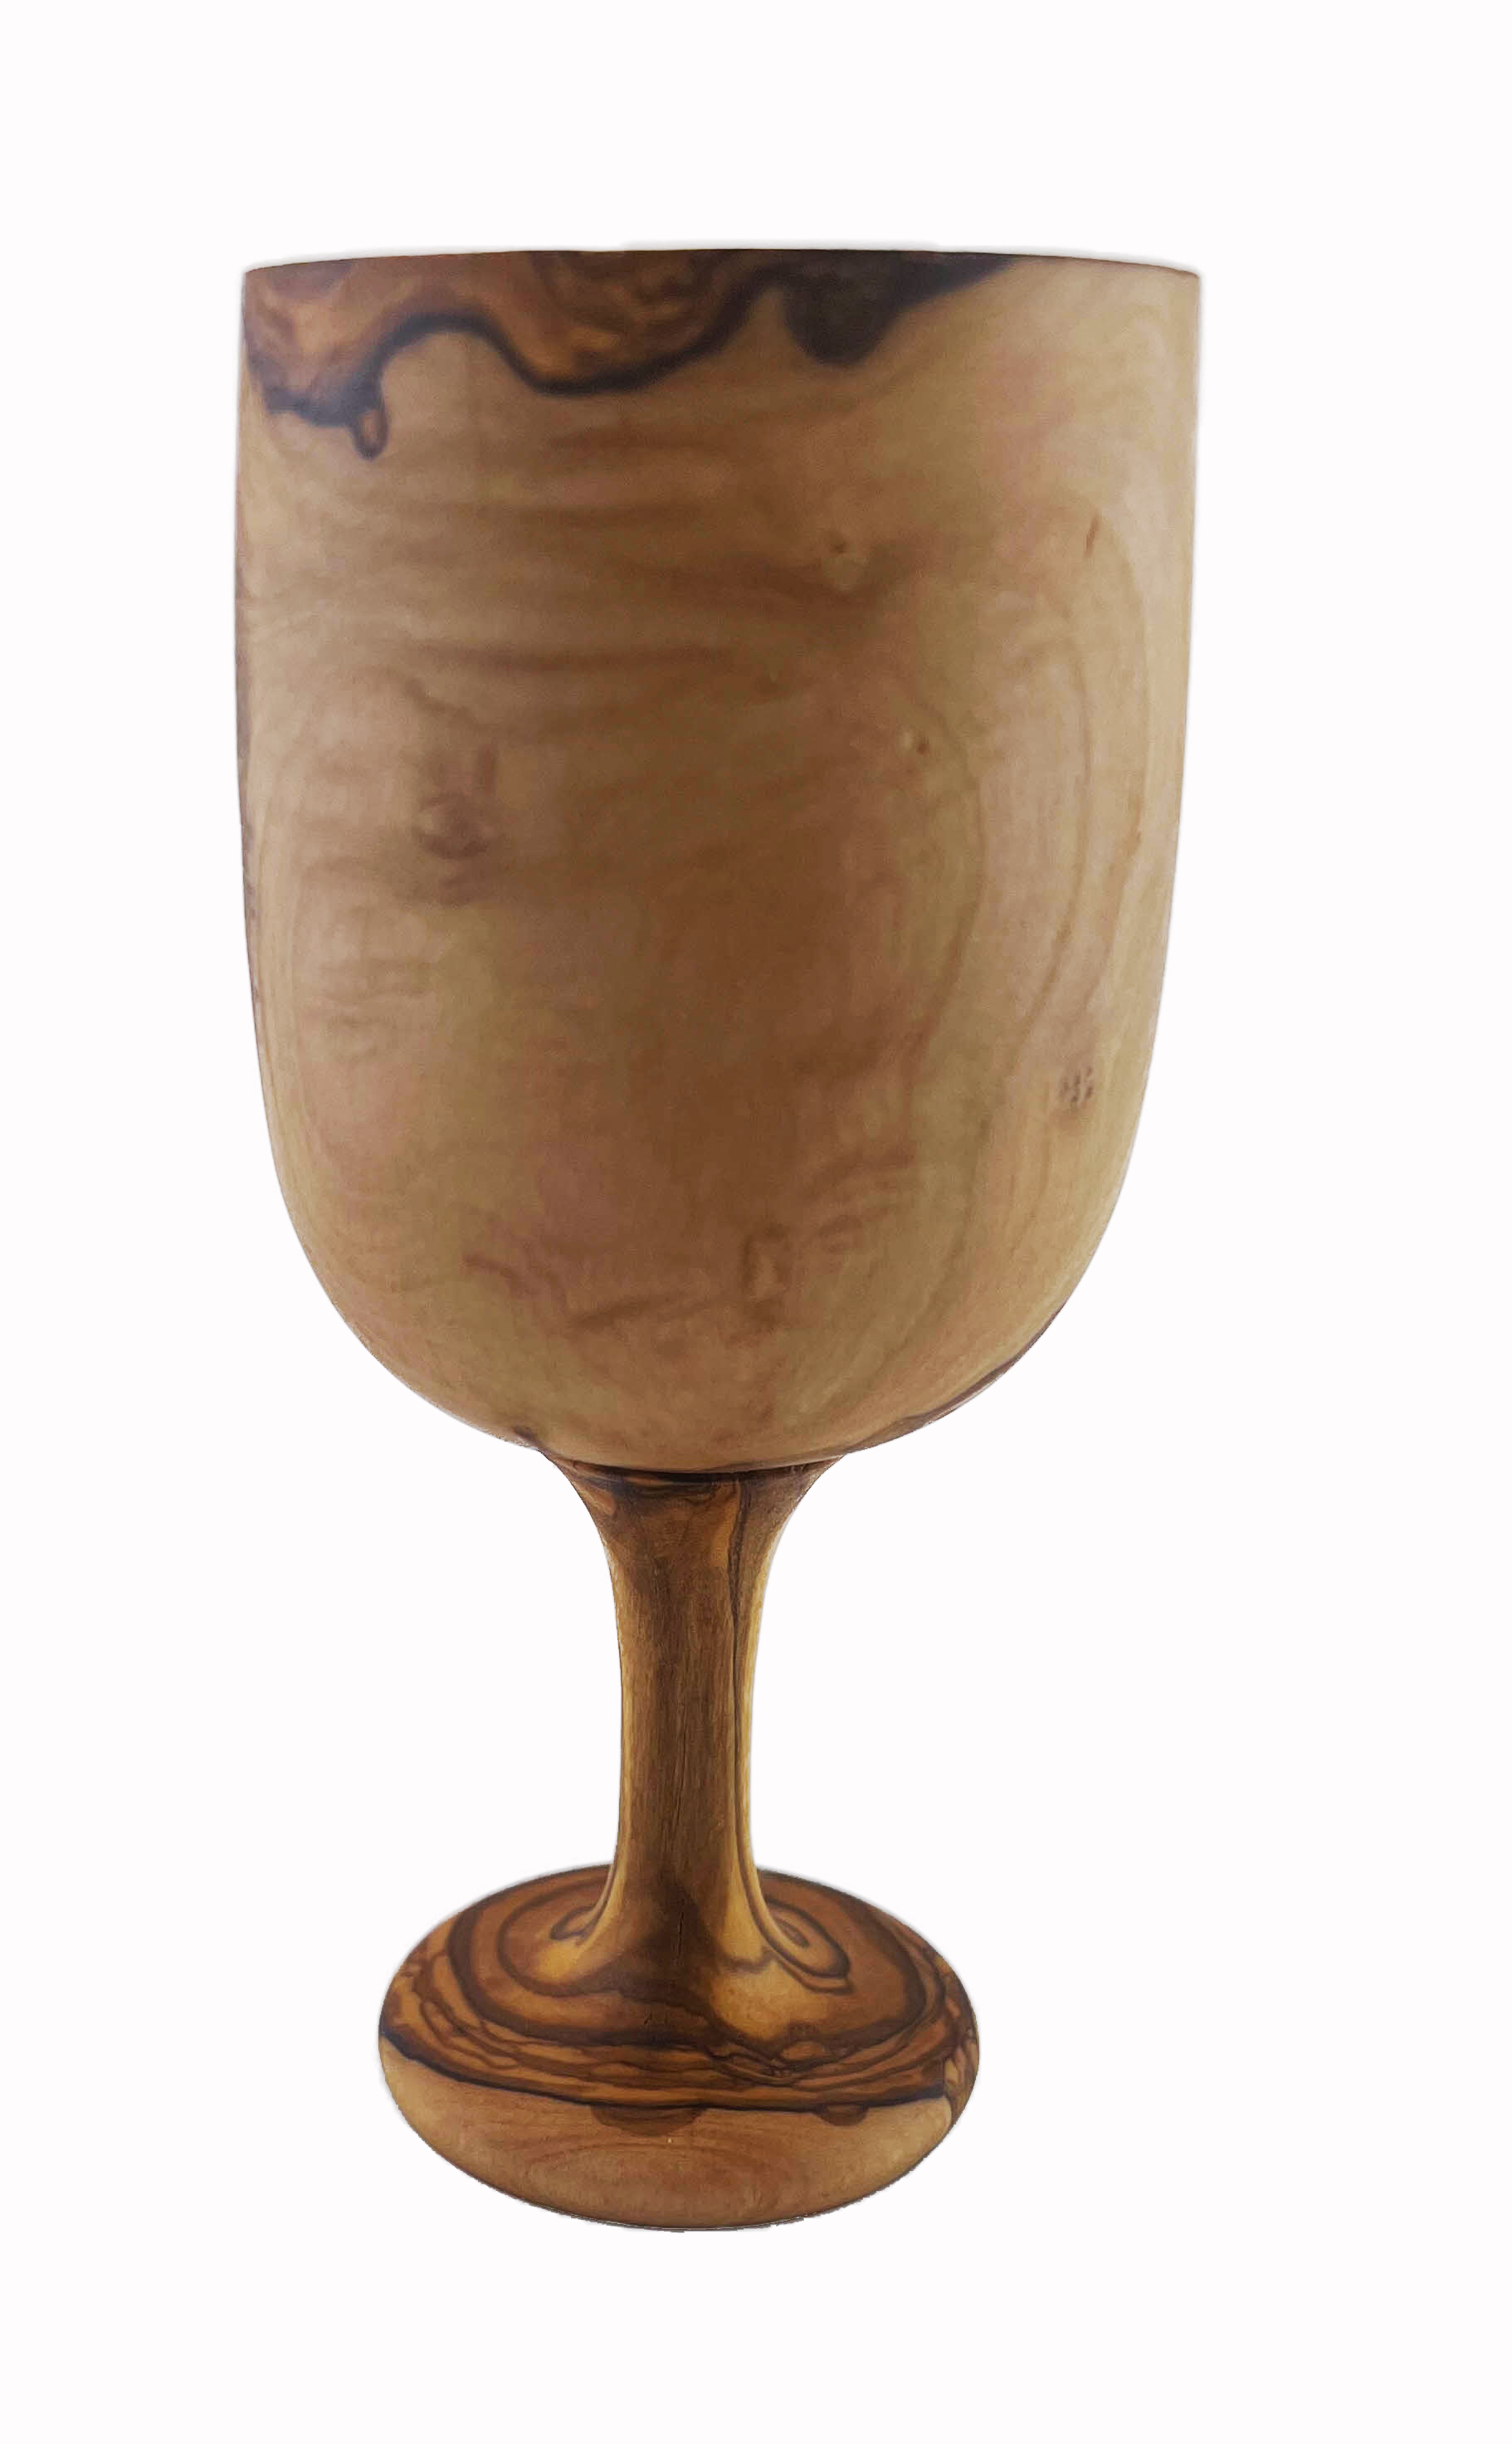 Vaso para beber de madera de olivo de 15 cm de altura.